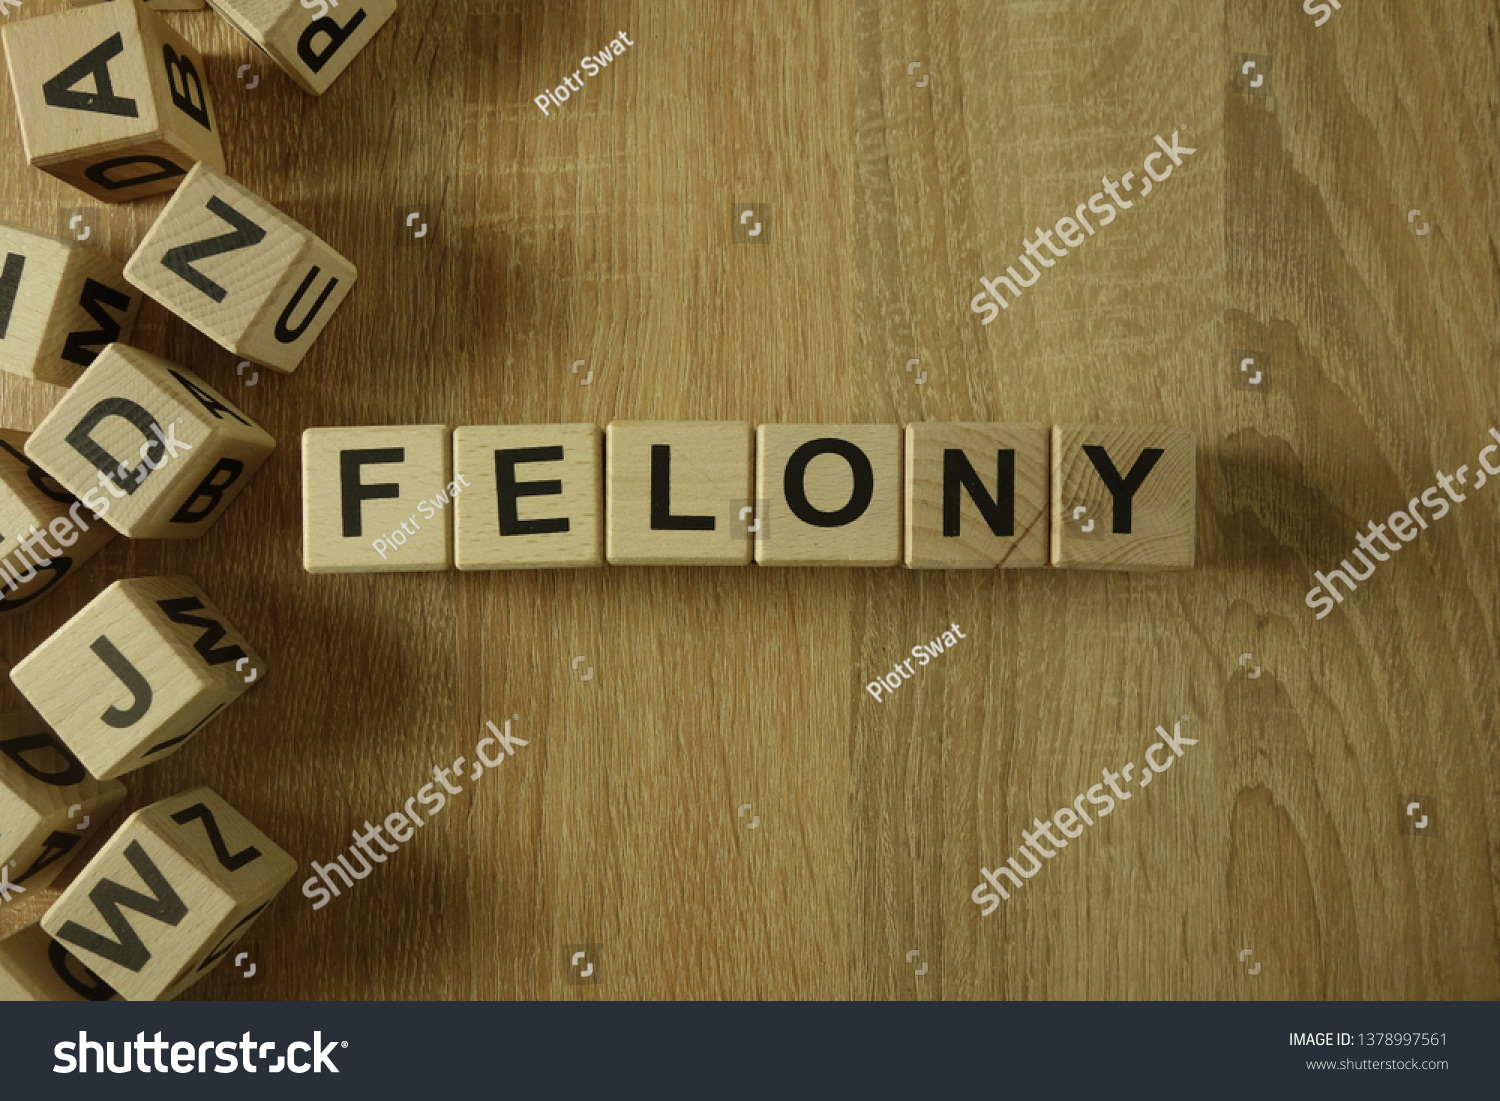 Felony word from wooden blocks on desk #1378997561